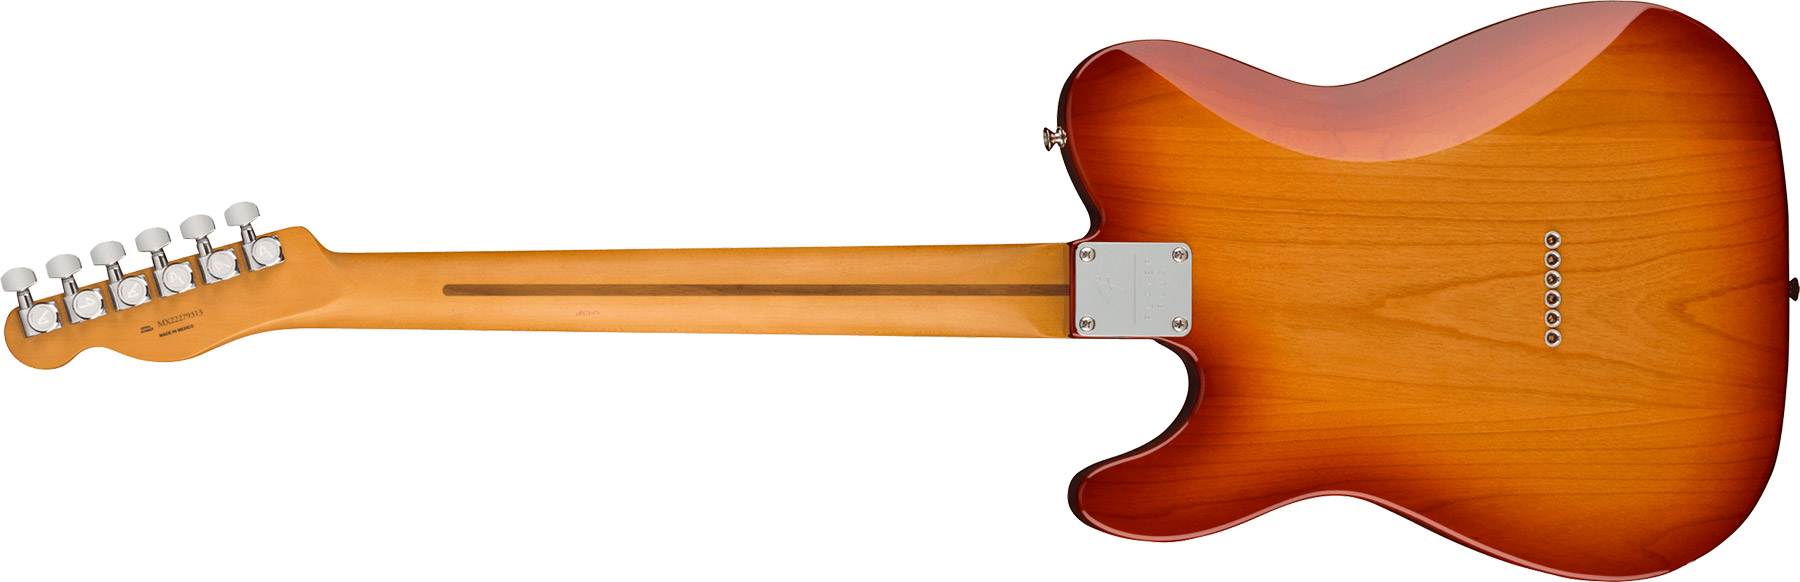 Fender Tele Player Plus Nashville Mex 2023 2s Ht Pf - Sienna Sunburst - Guitarra eléctrica con forma de tel - Variation 1